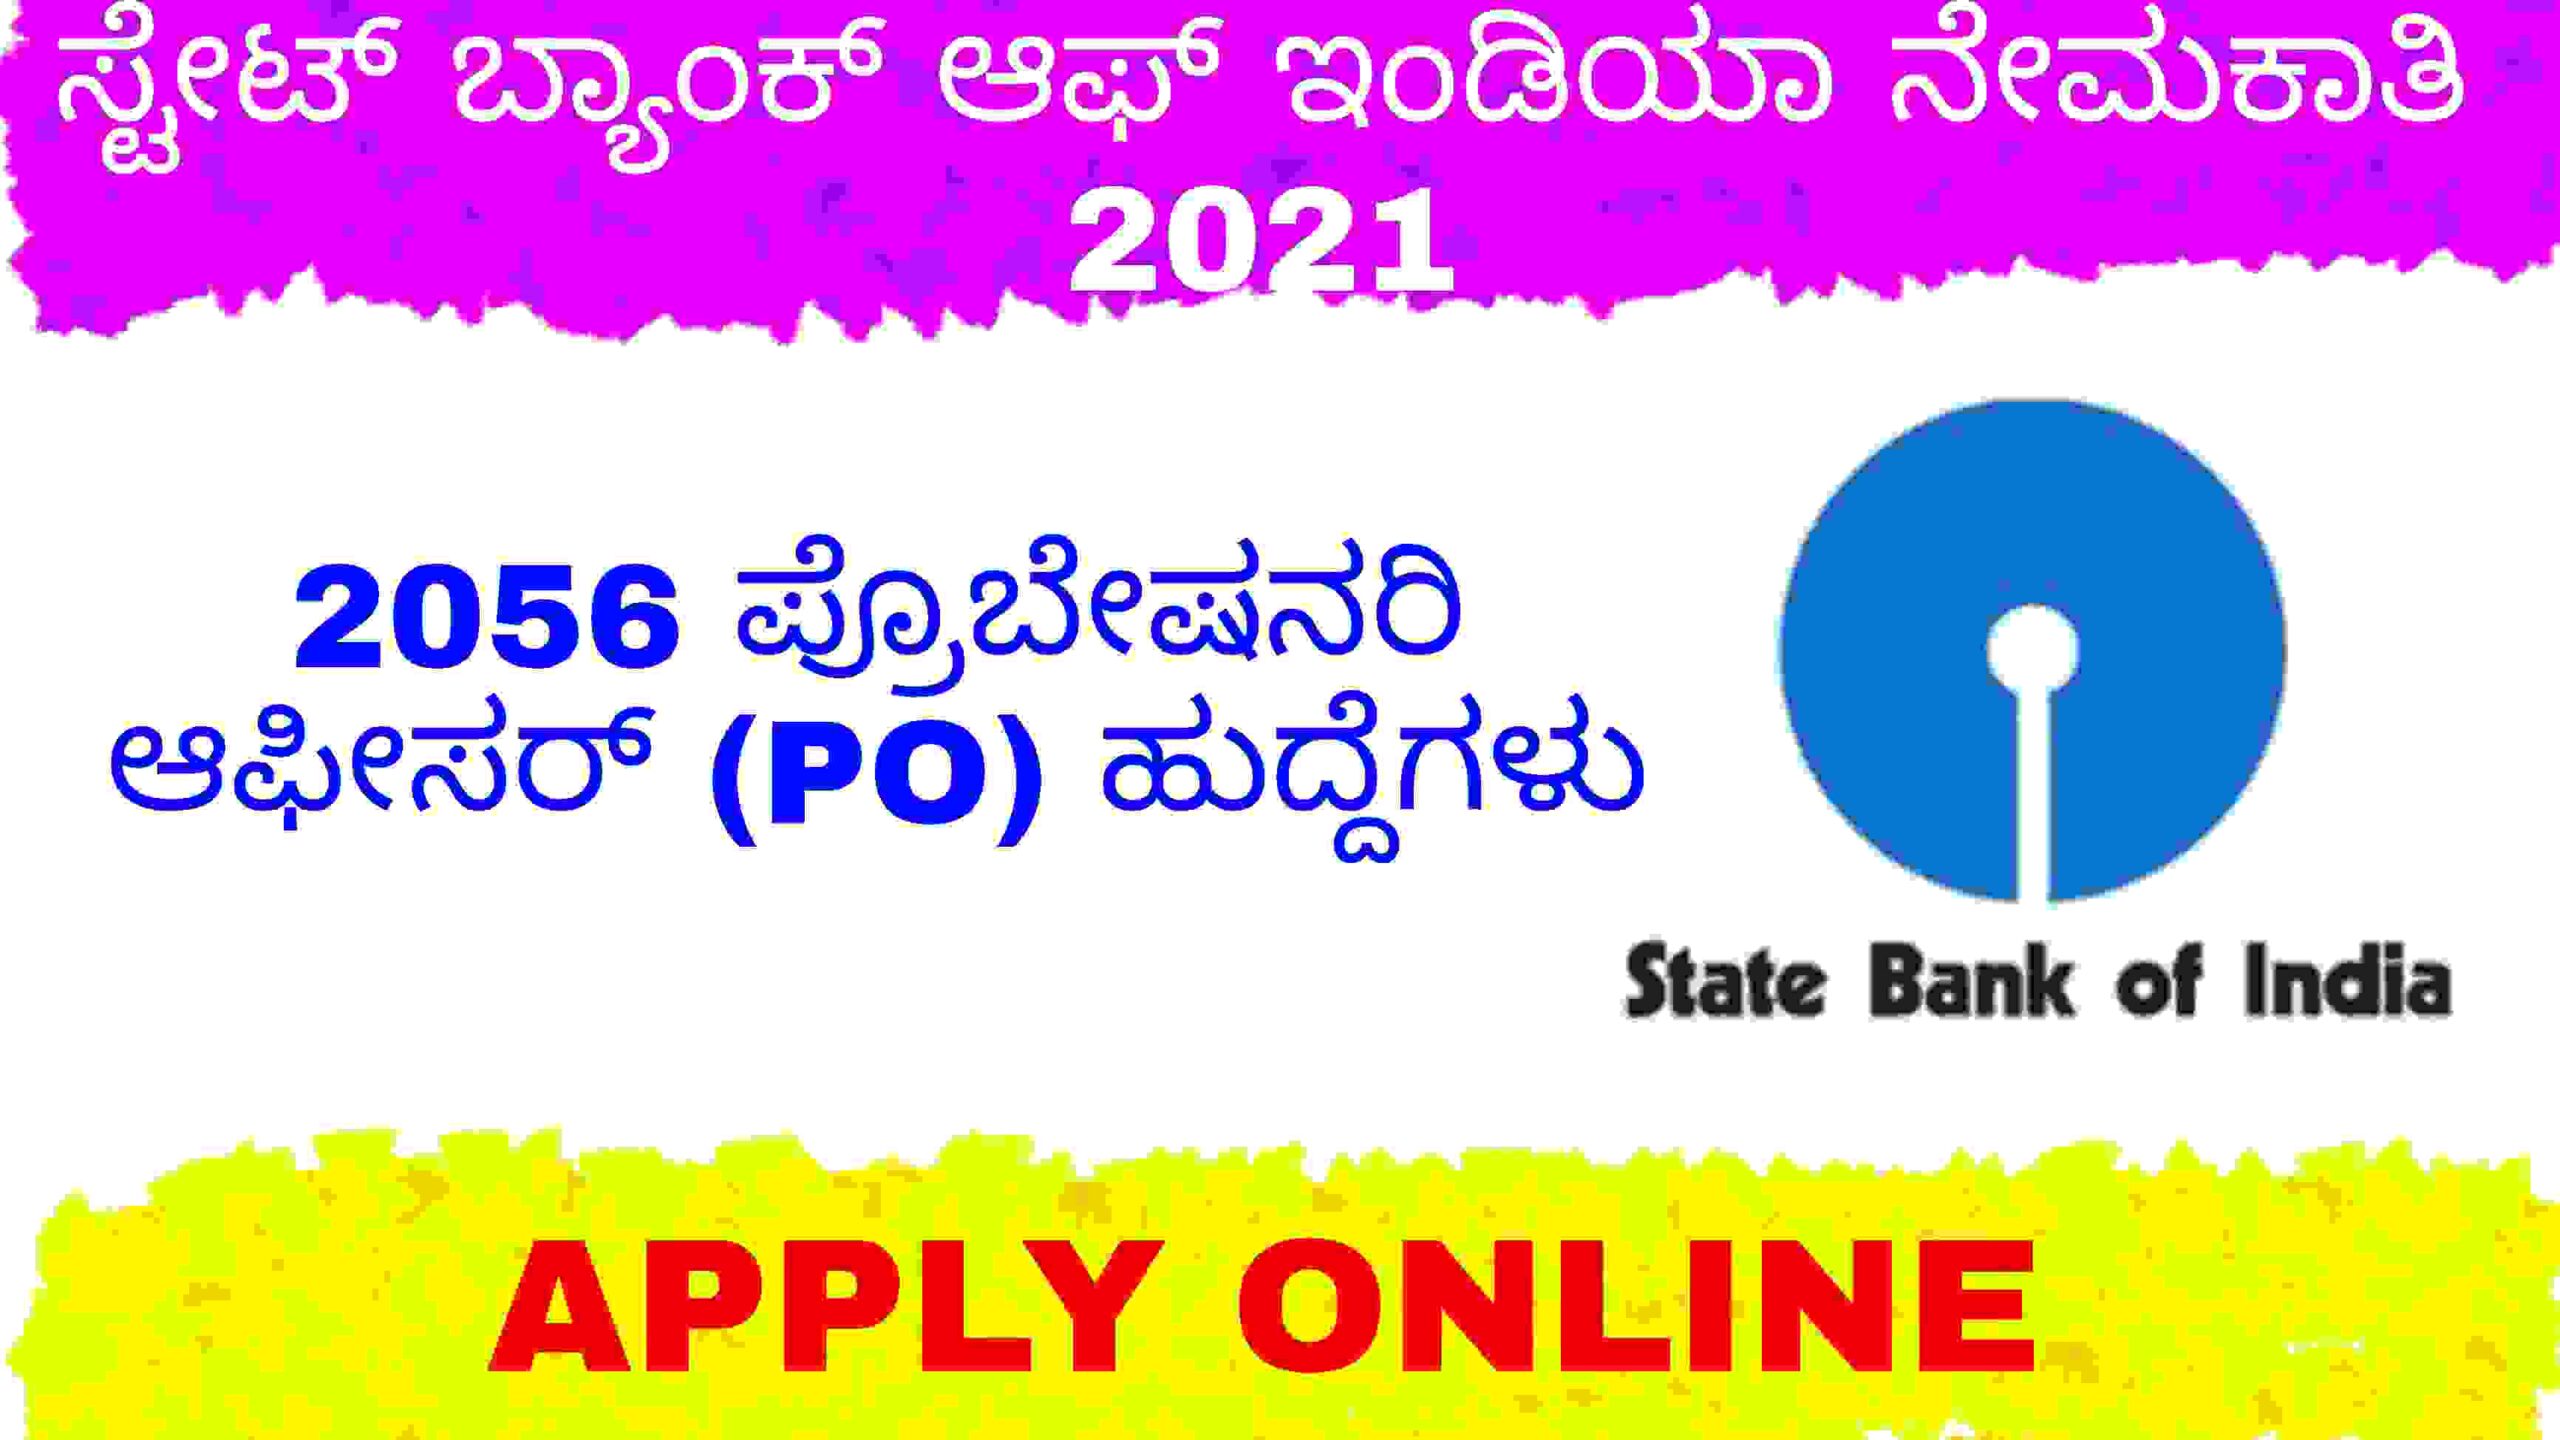 SBI Recruitment 2021- 2056 ಪ್ರೊಬೇಷನರಿ ಆಫೀಸರ್ (PO) ಹುದ್ದೆಗಳಿಗೆ ಅರ್ಜಿ ಆಹ್ವಾನ.